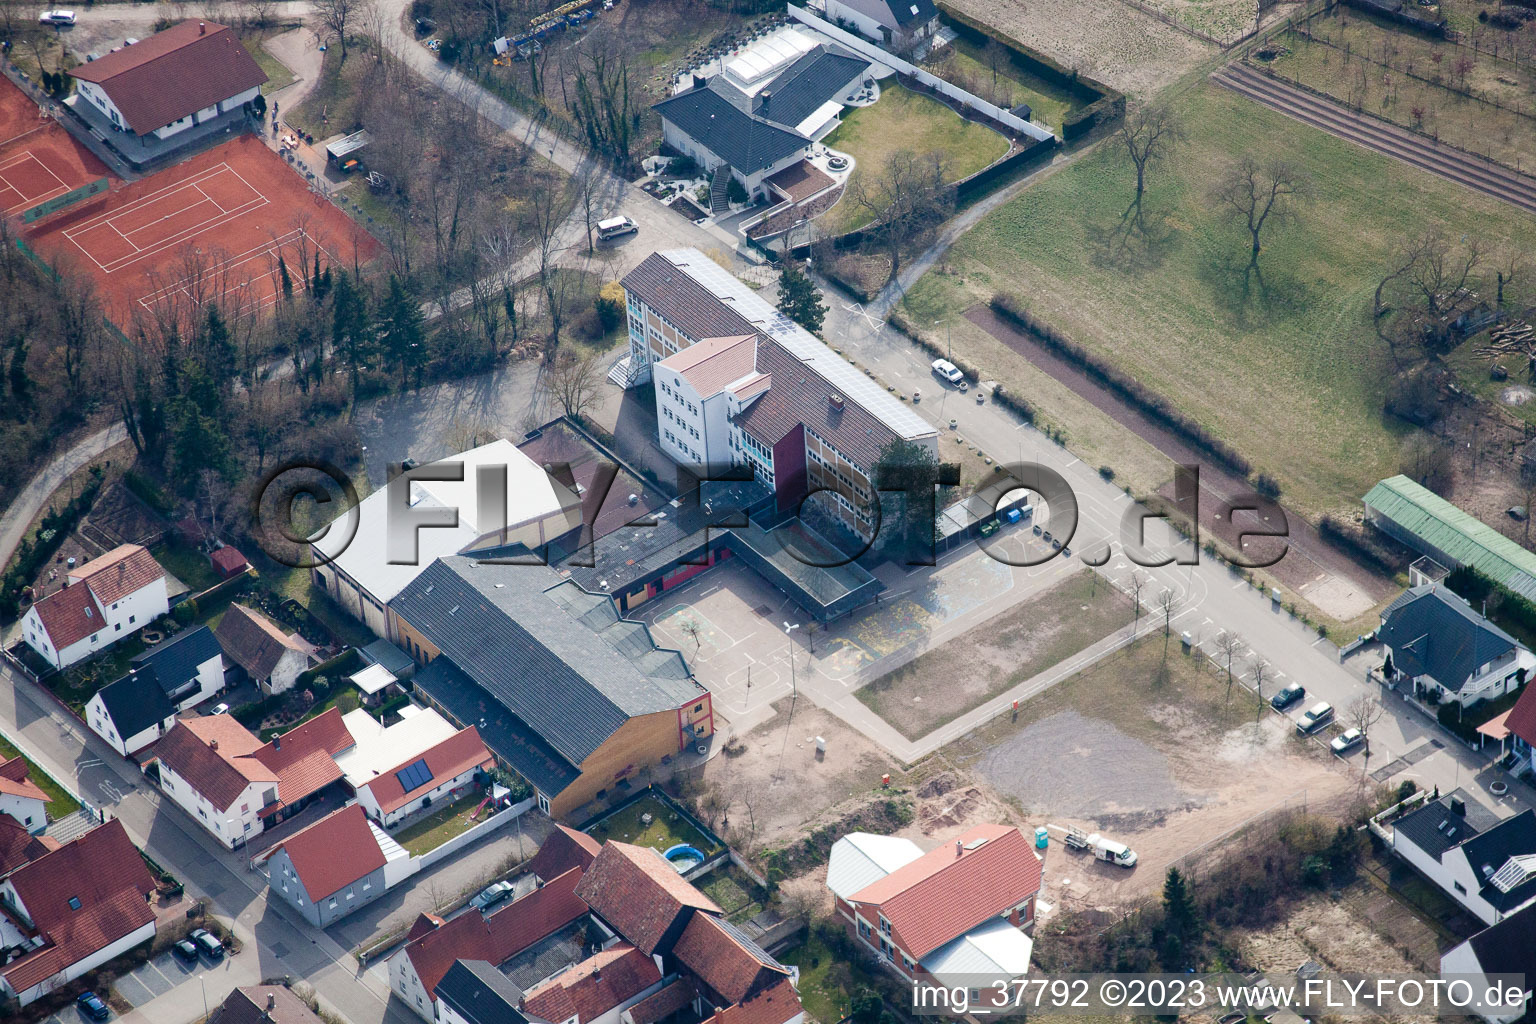 Quartier Sondernheim in Germersheim dans le département Rhénanie-Palatinat, Allemagne vue du ciel